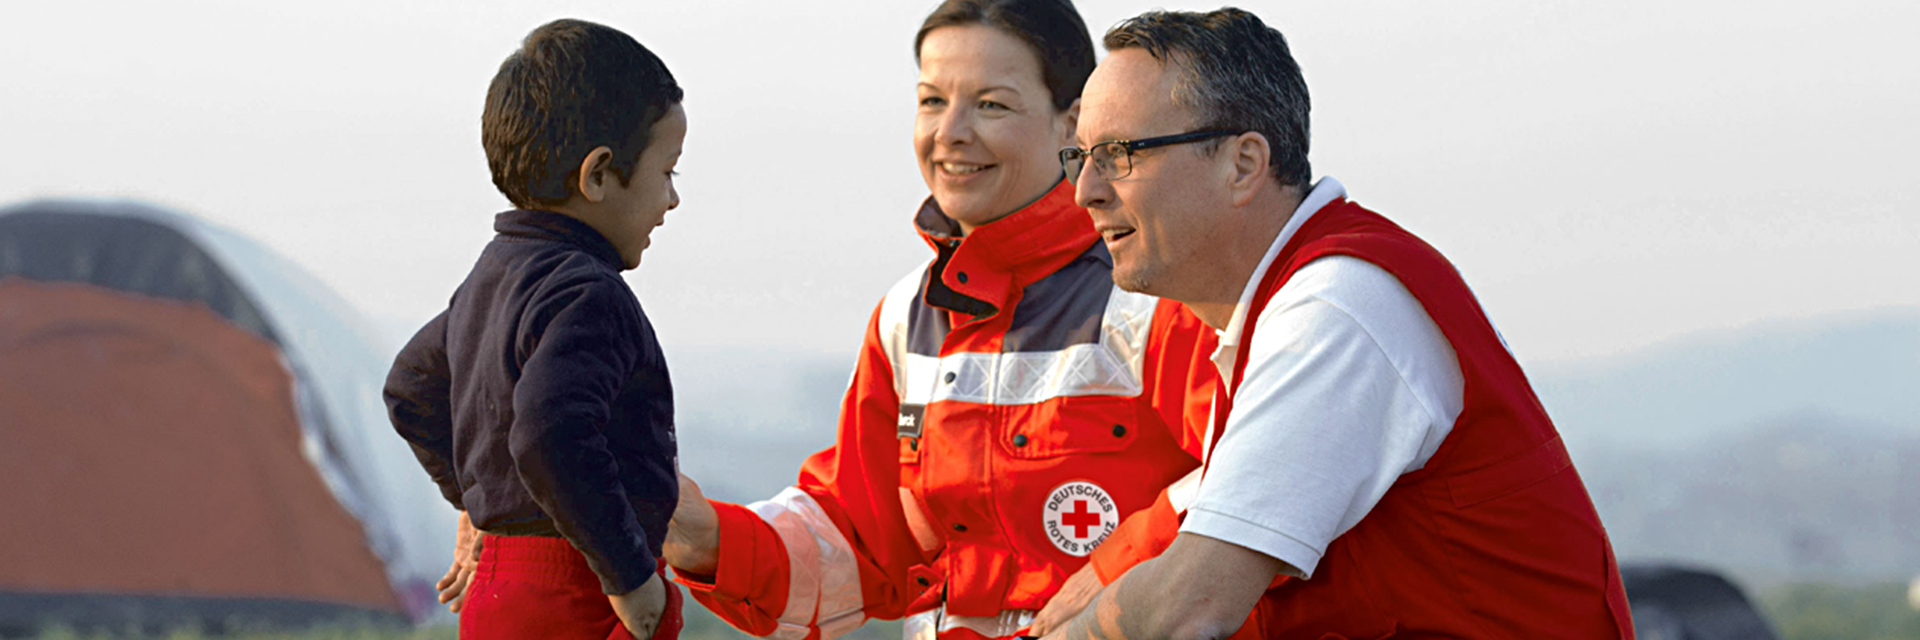 Case Study: German Red Cross - Impression #1